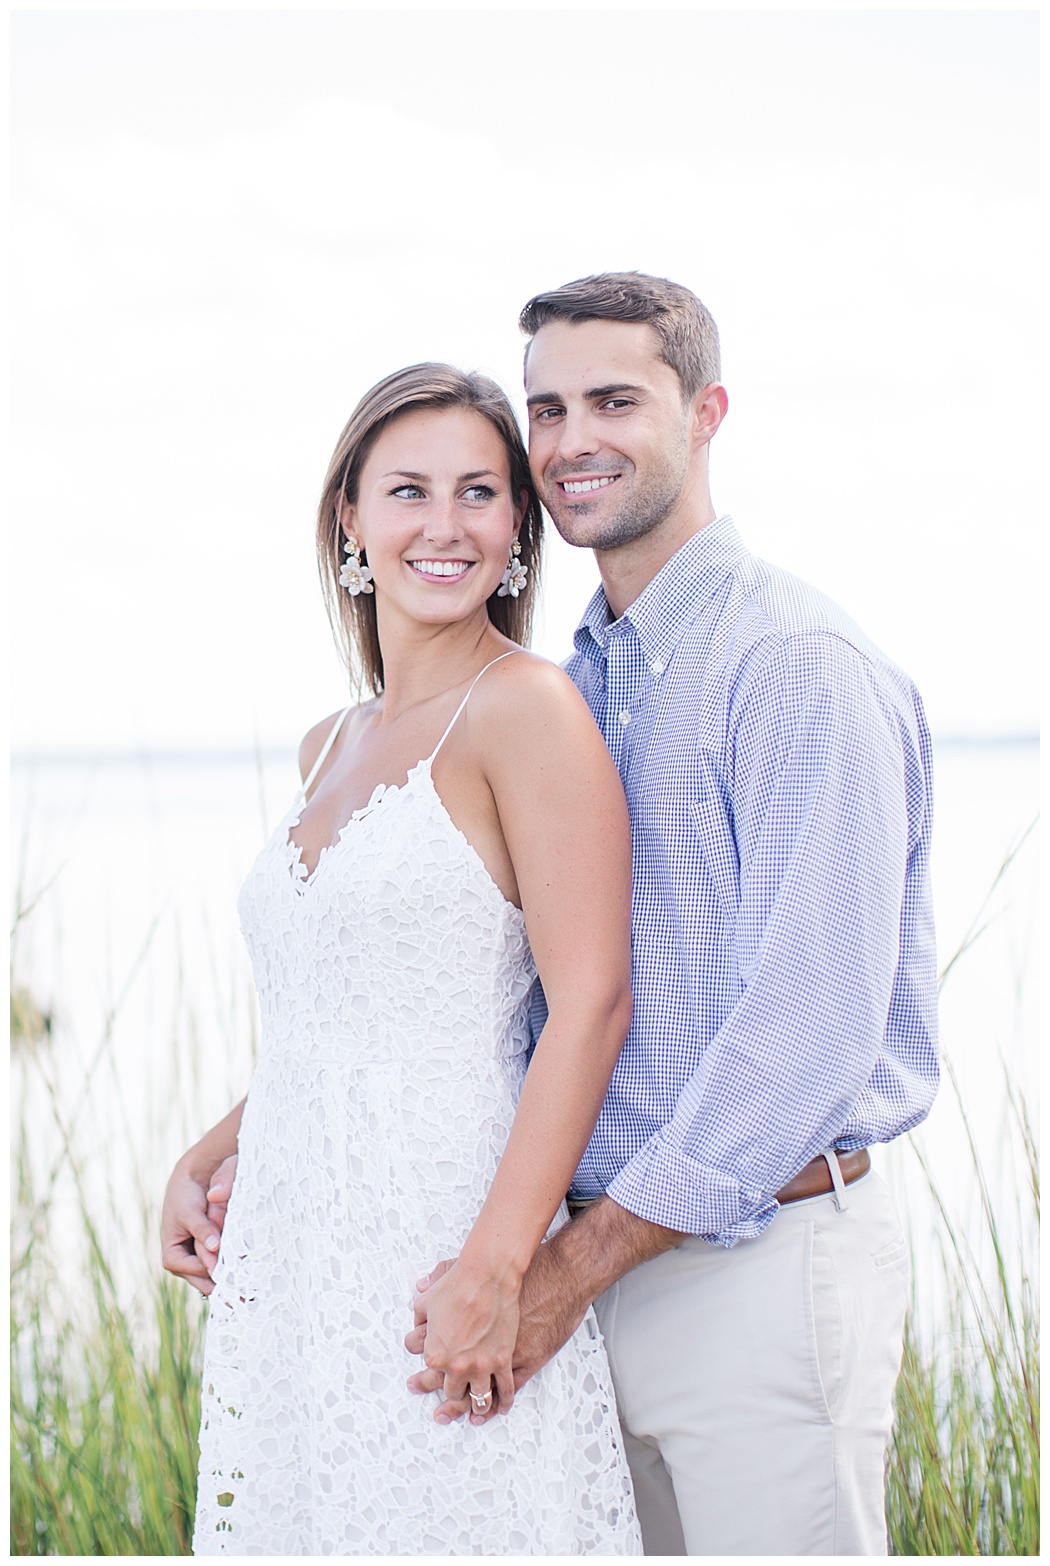 Jamestown Island Engagement Photos | Williamsburg Wedding Photographer